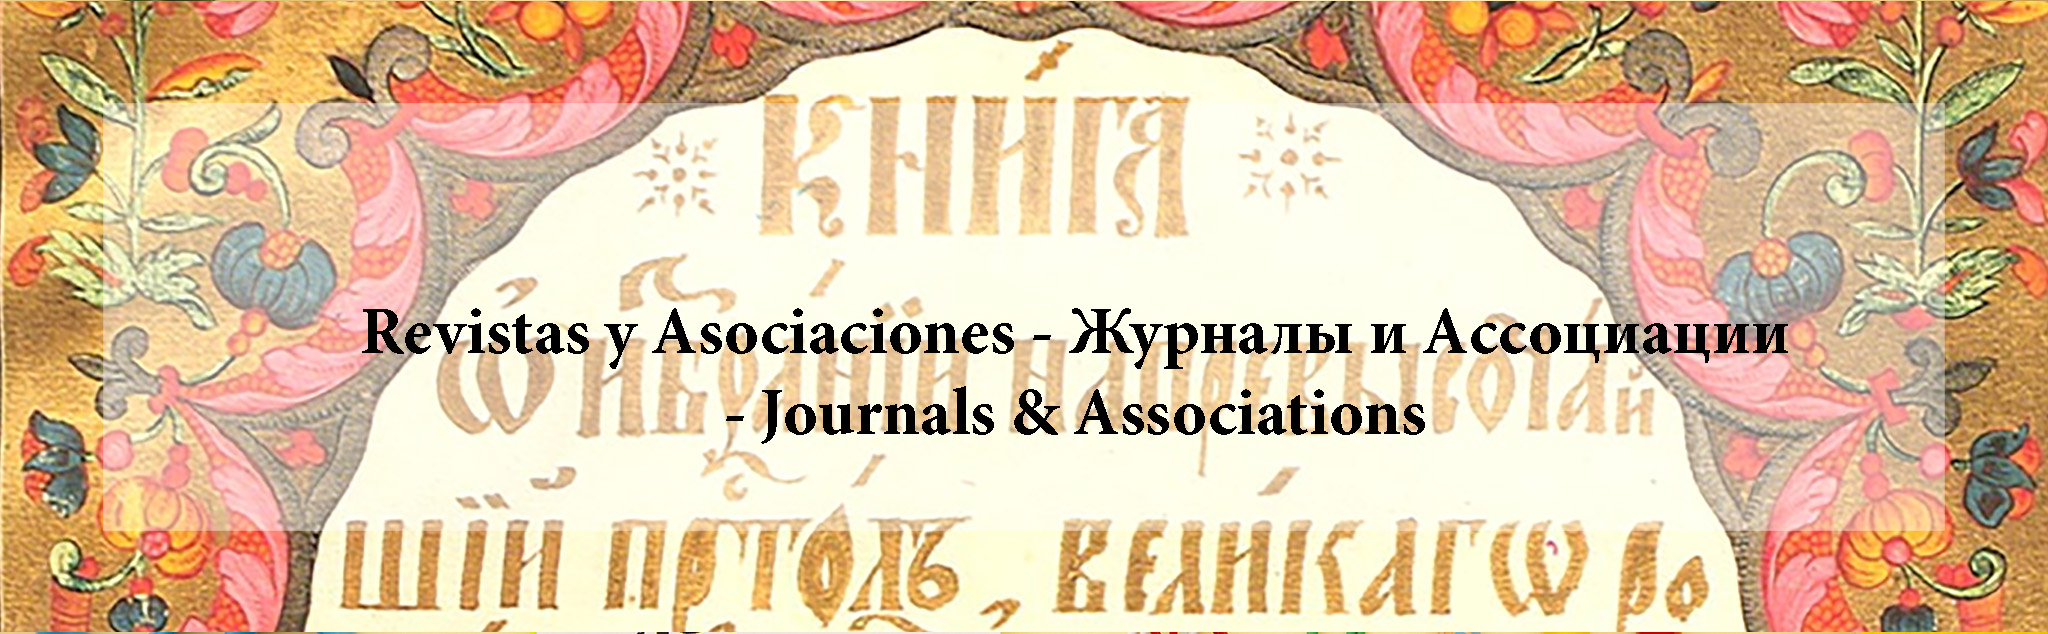 Revistas y Asociaciones - Журналы и Ассоциации - Journals & Associations